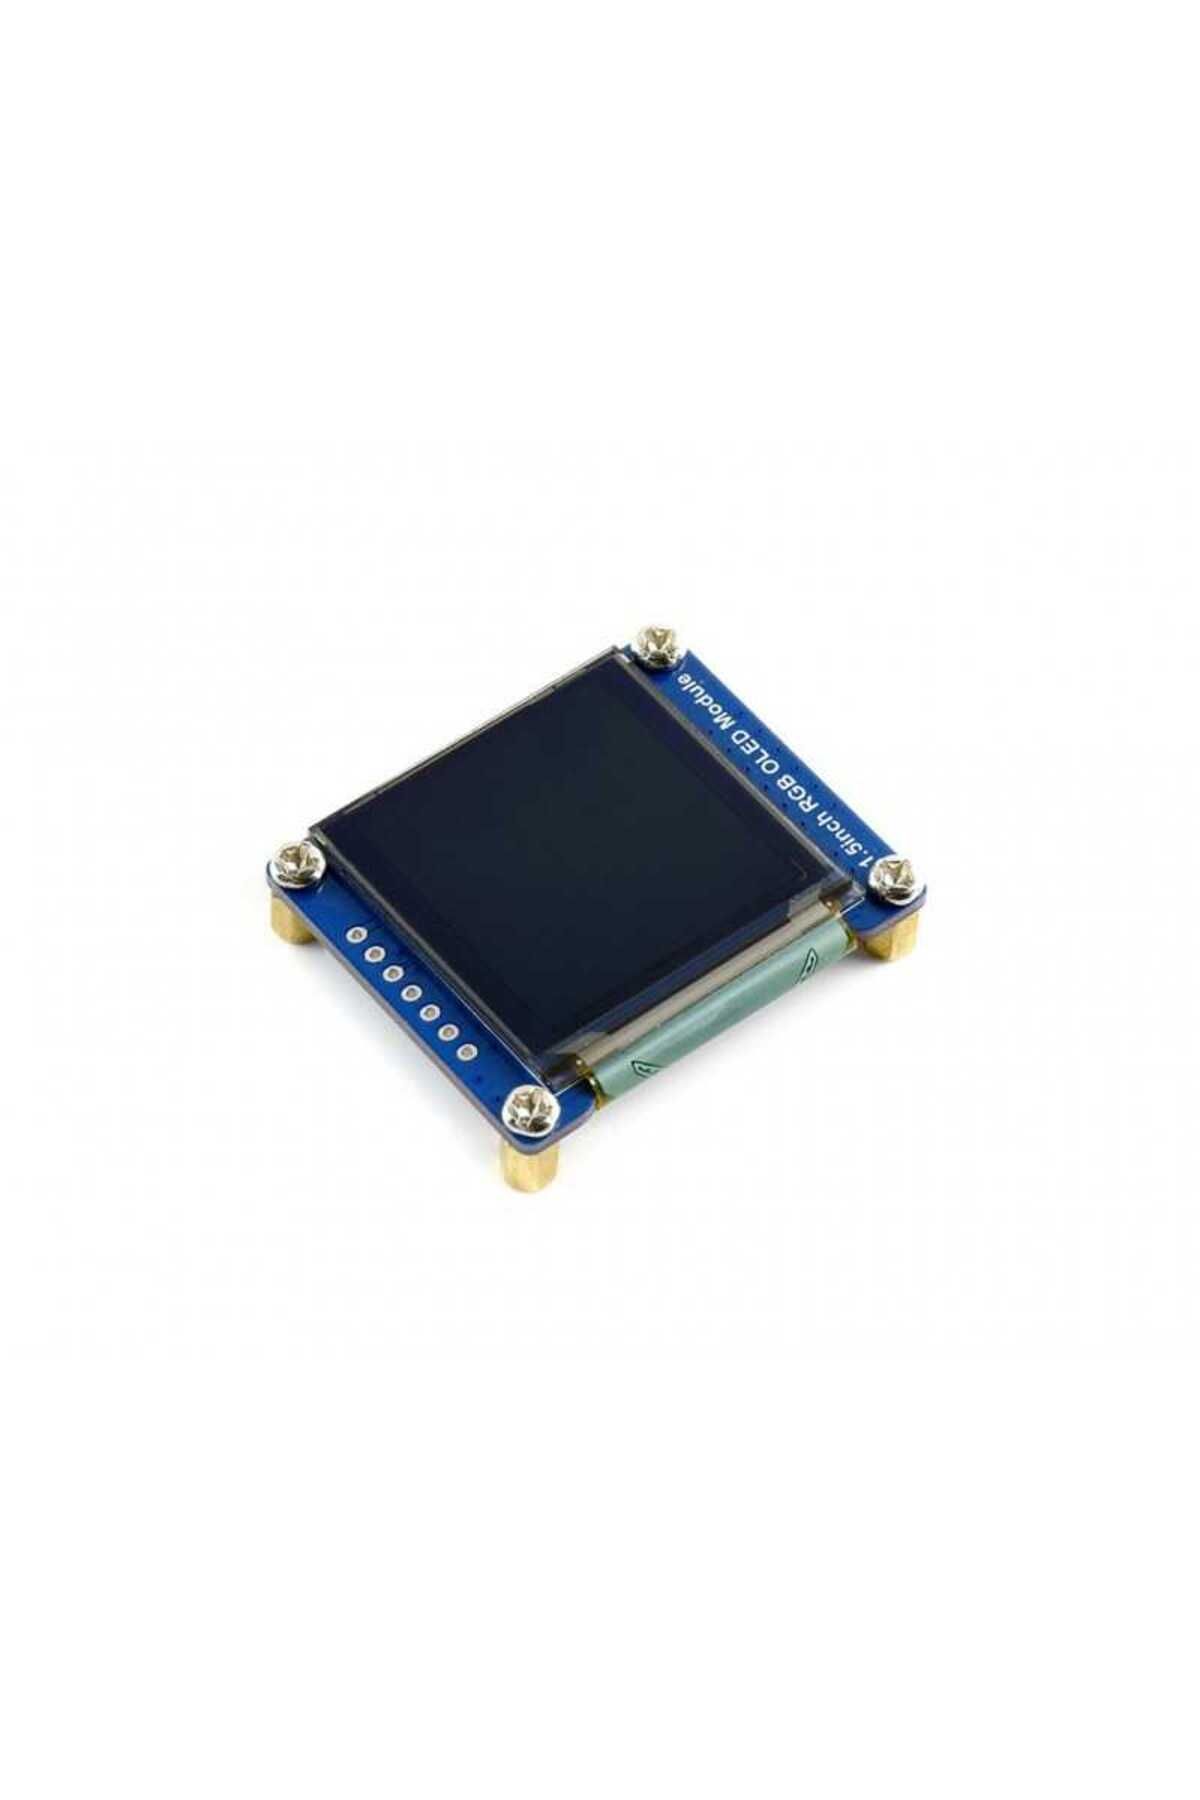 WaveShare 1.5 inch RGB OLED Display - 128x128